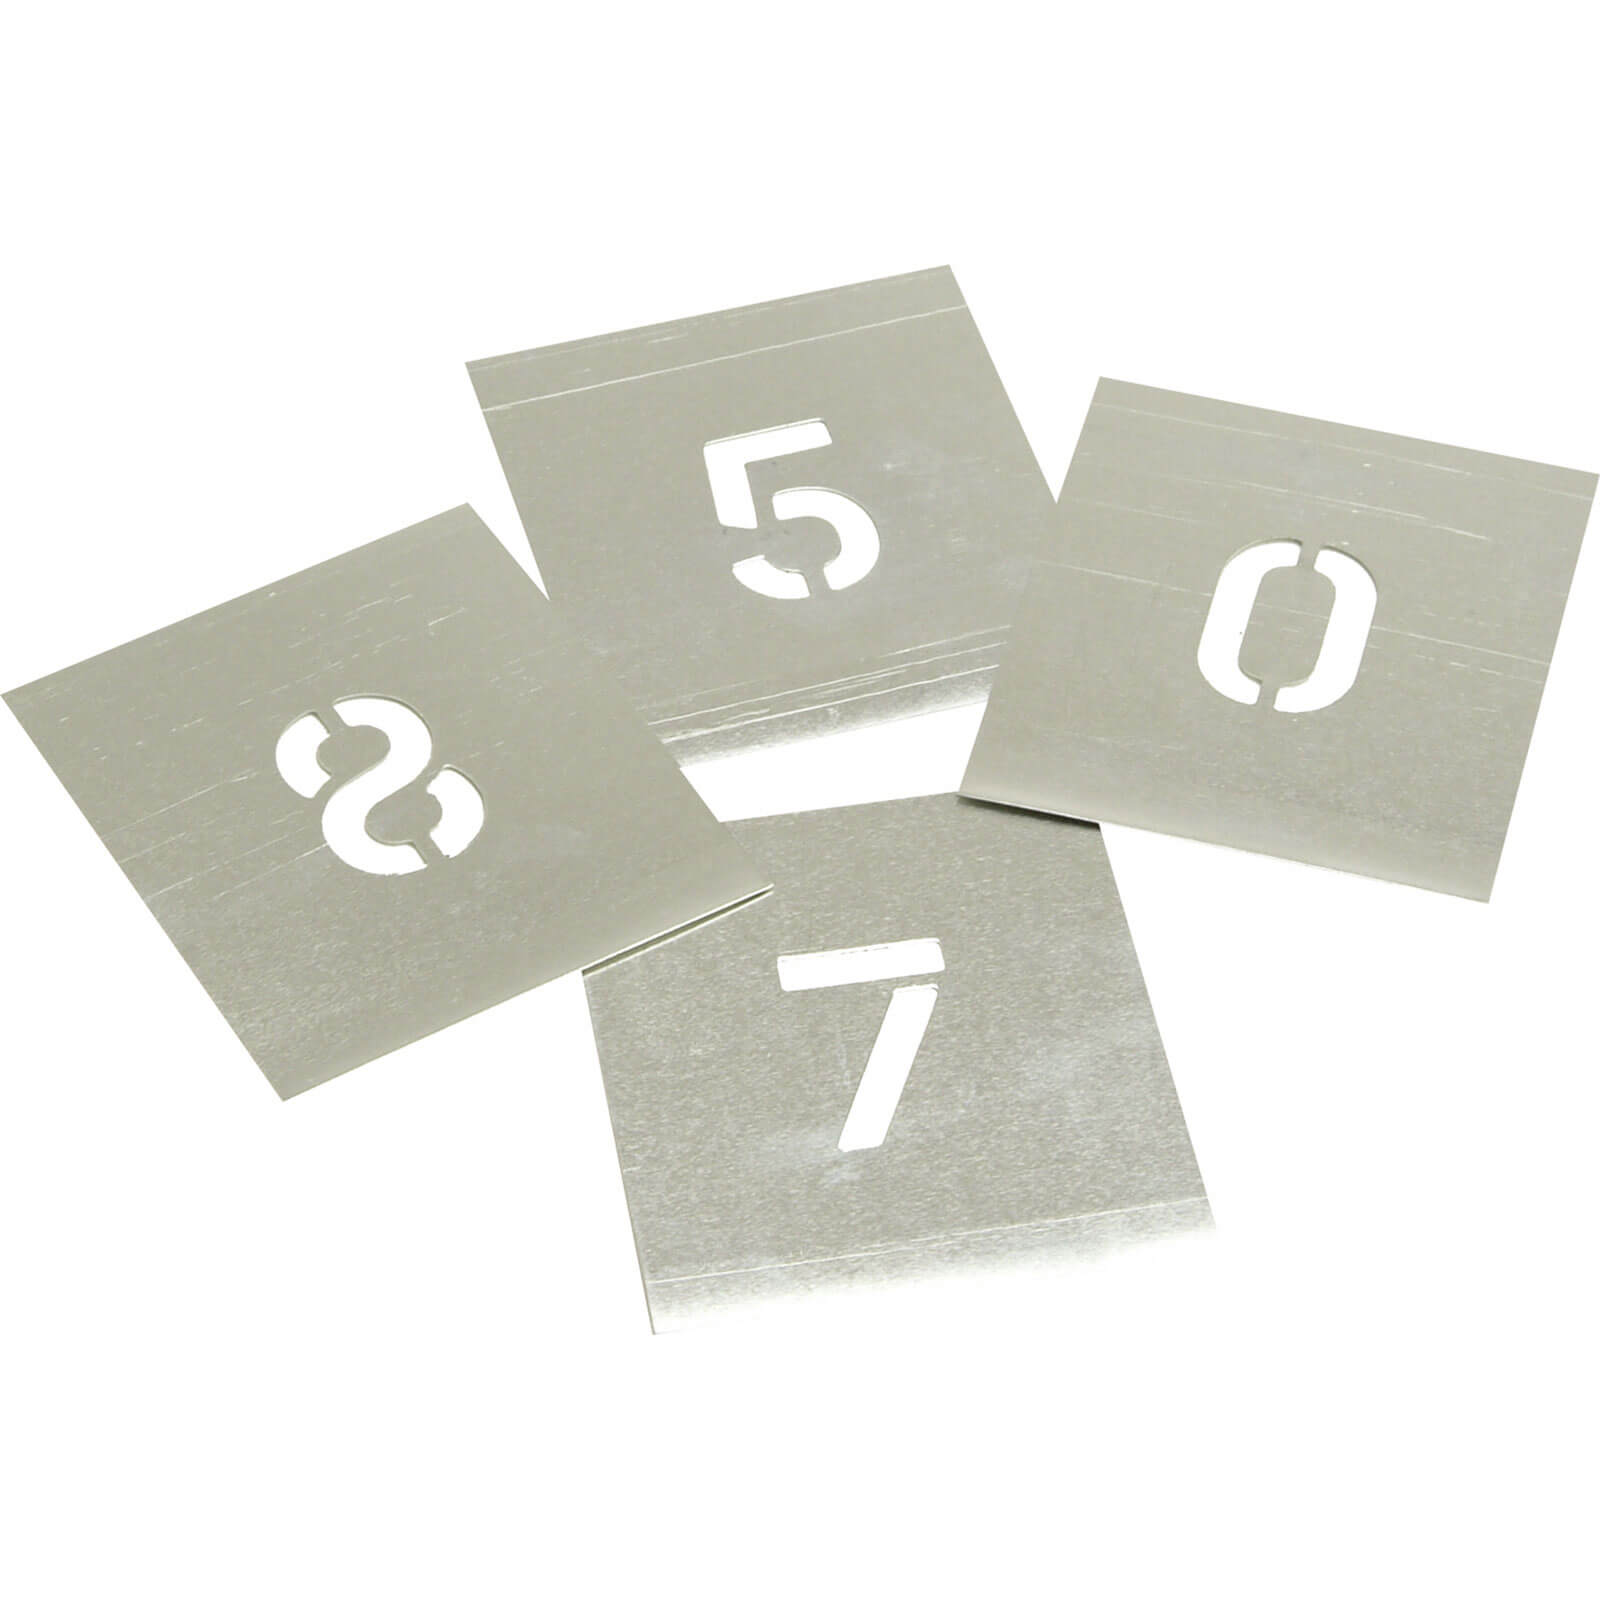 Image of Stencils 8 Piece Zinc Number Stencil Set in Wallet 1"